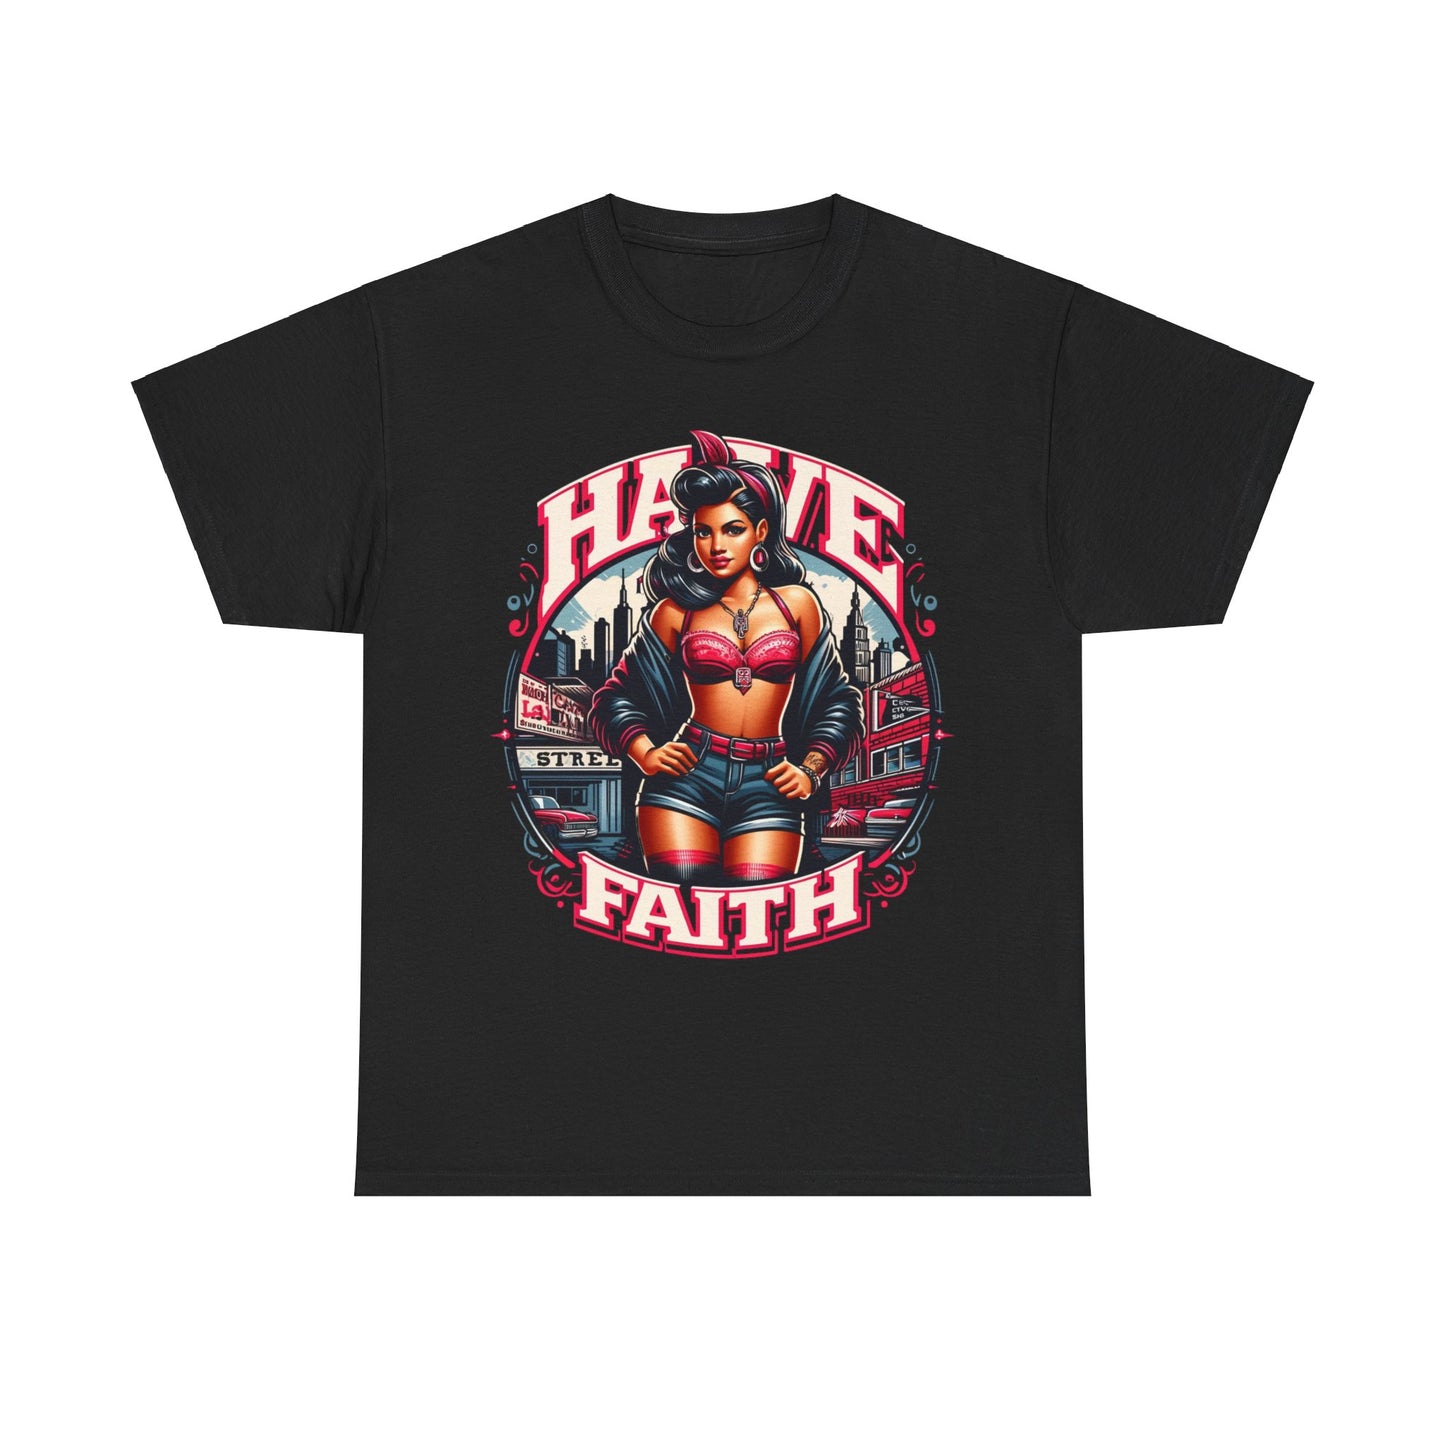 Y.M.L.Y. "Have Faith" T-Shirt Motivational Tee Urban Wear Street Wear Classic Cotton Tee